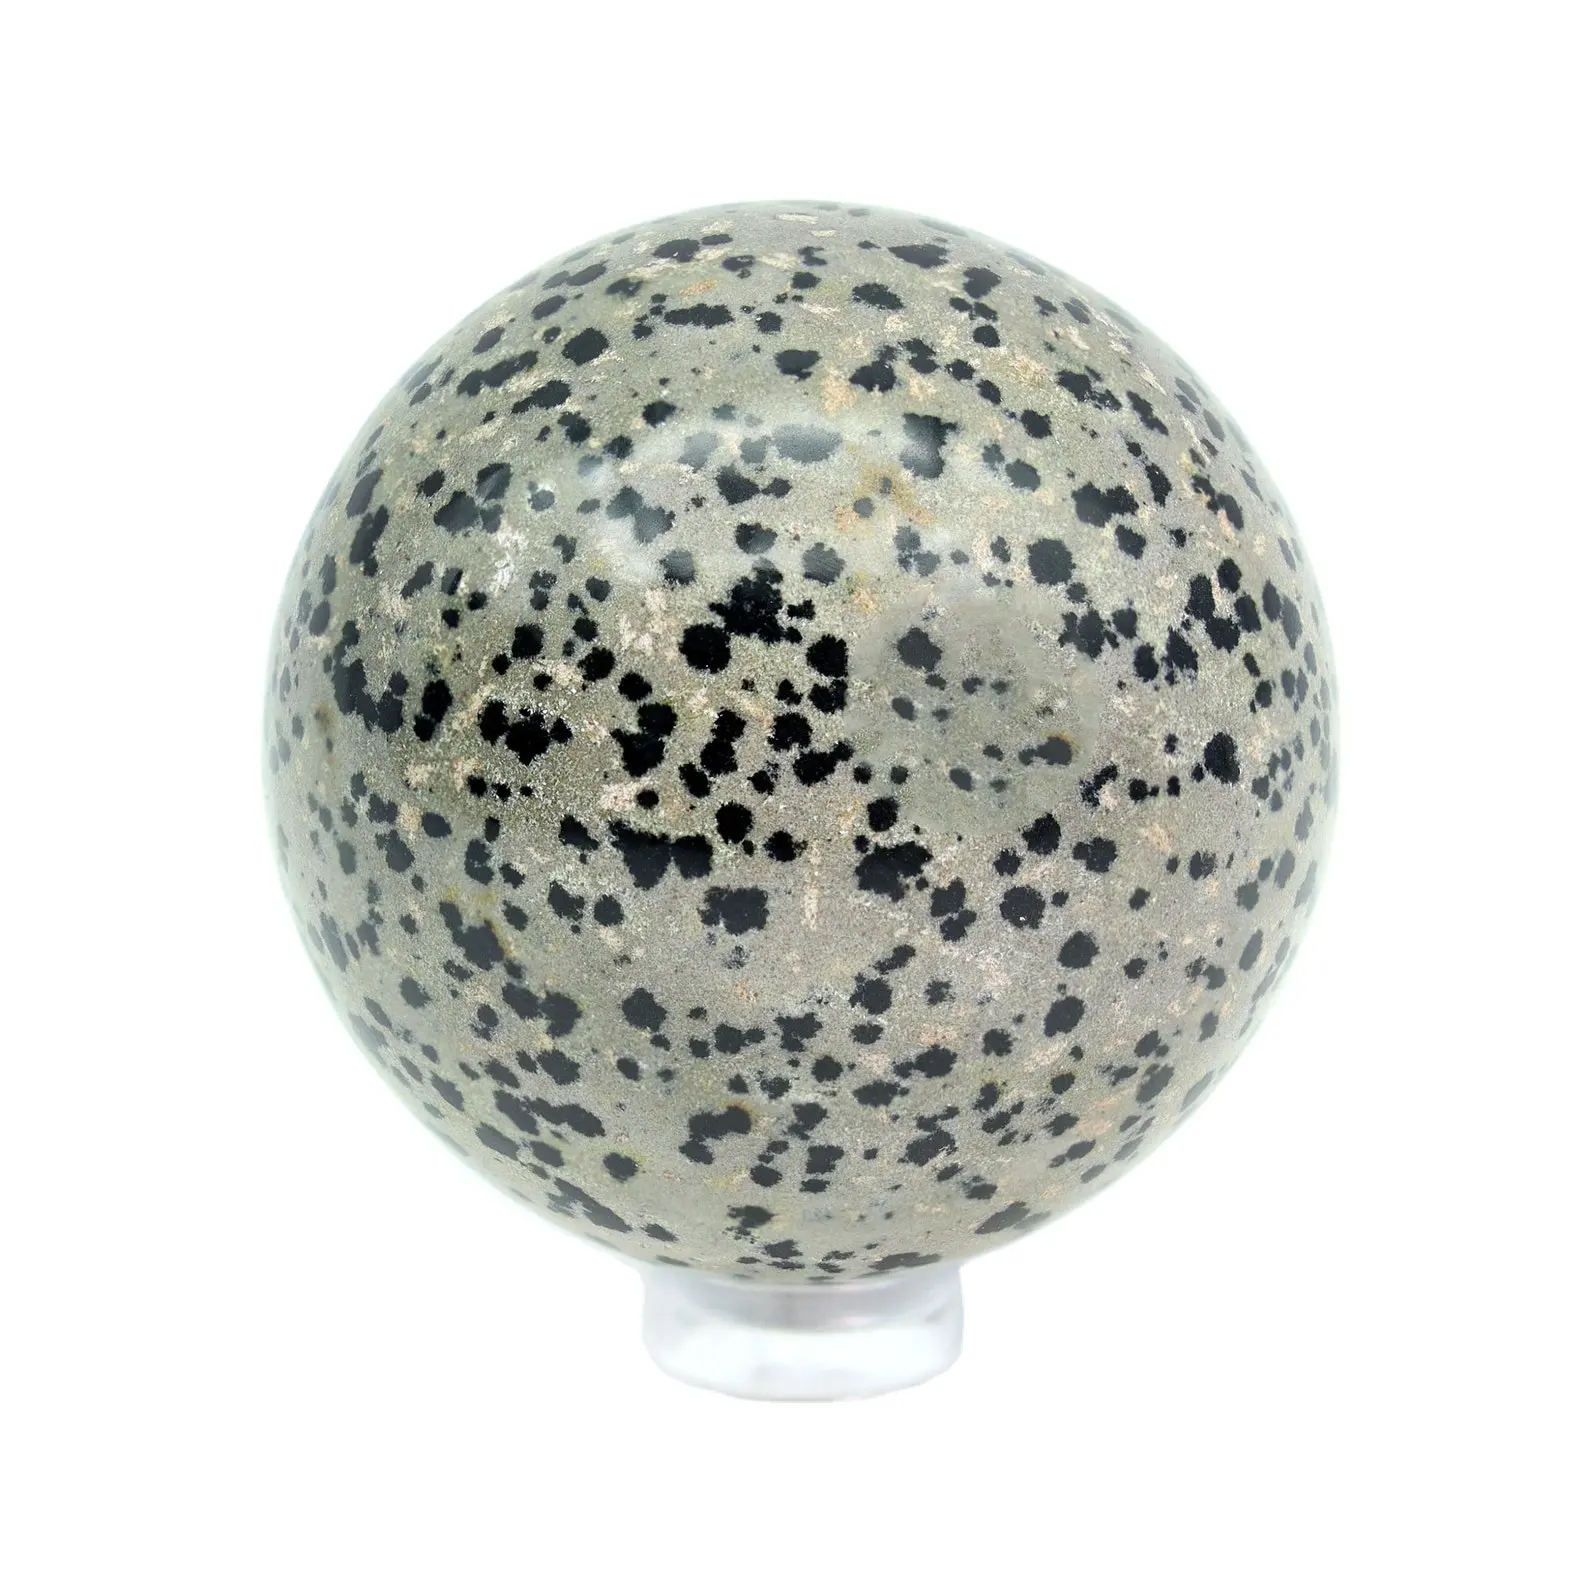 Bola de esfera de jaspe dálmata Natural, piedra de jaspe dálmata redonda, Reiki, artesanal, con rejillas de cristal